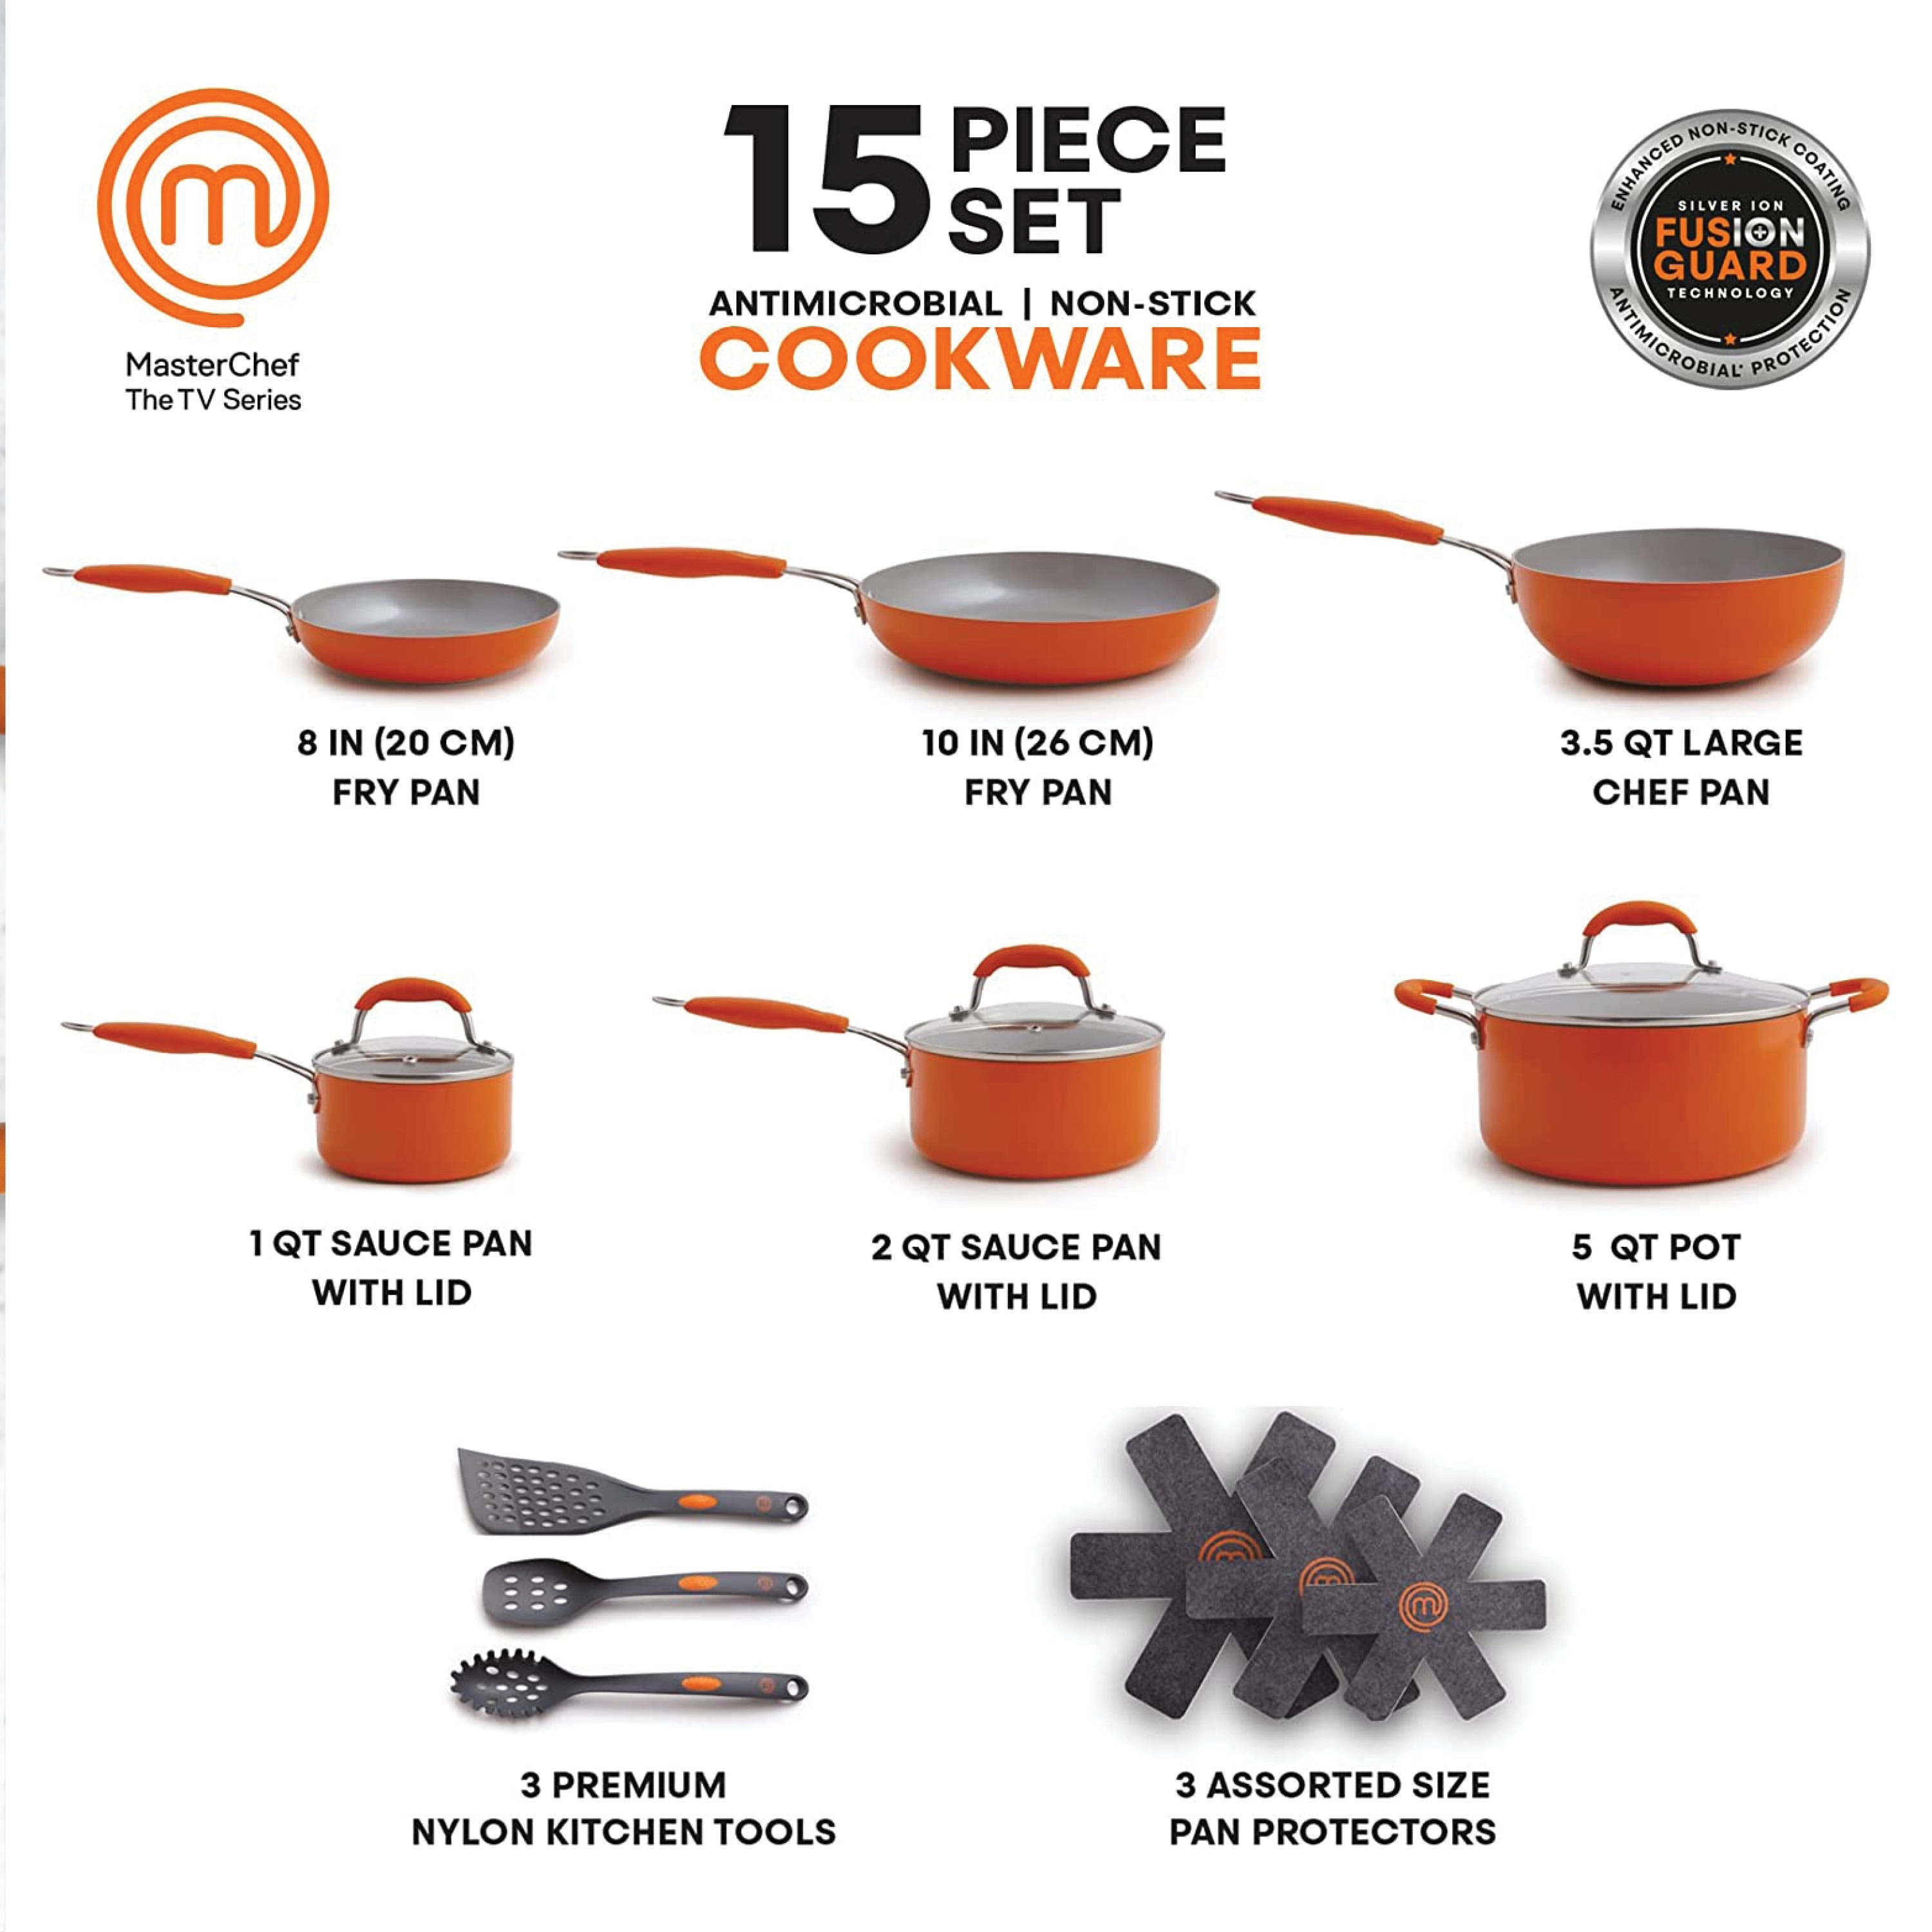 https://ak1.ostkcdn.com/images/products/is/images/direct/067289dc56e4cee359531ccc3bd1f4f6471d7520/MasterChef-MC3000-15-Pieces-Champions-Cookware-Set-Orange.jpg